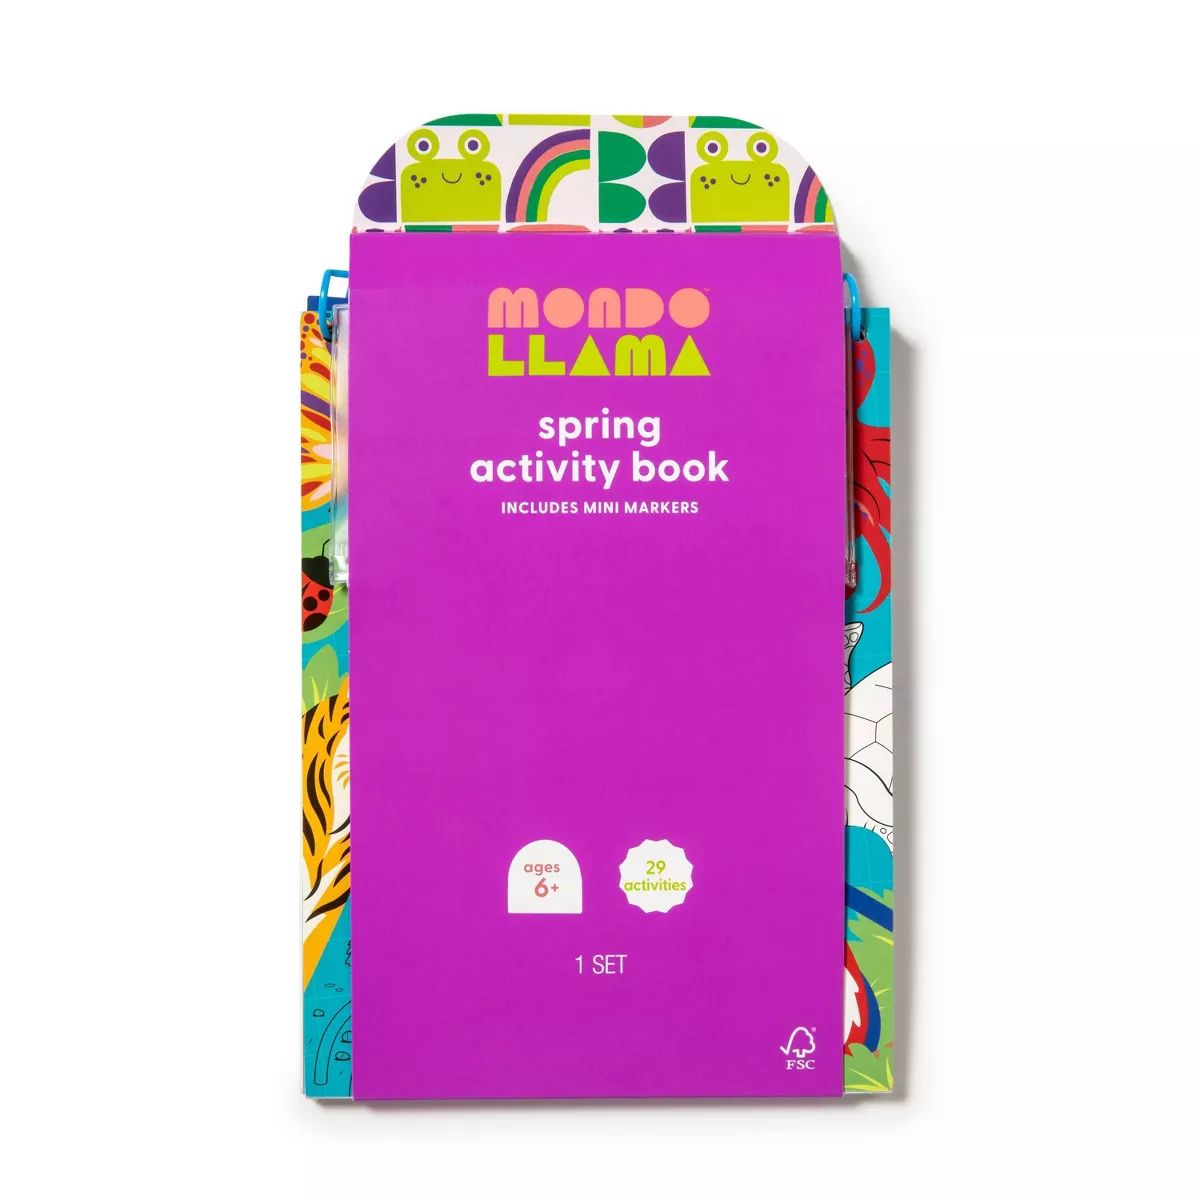 Spring Activity Book - Mondo Llama™ | Target